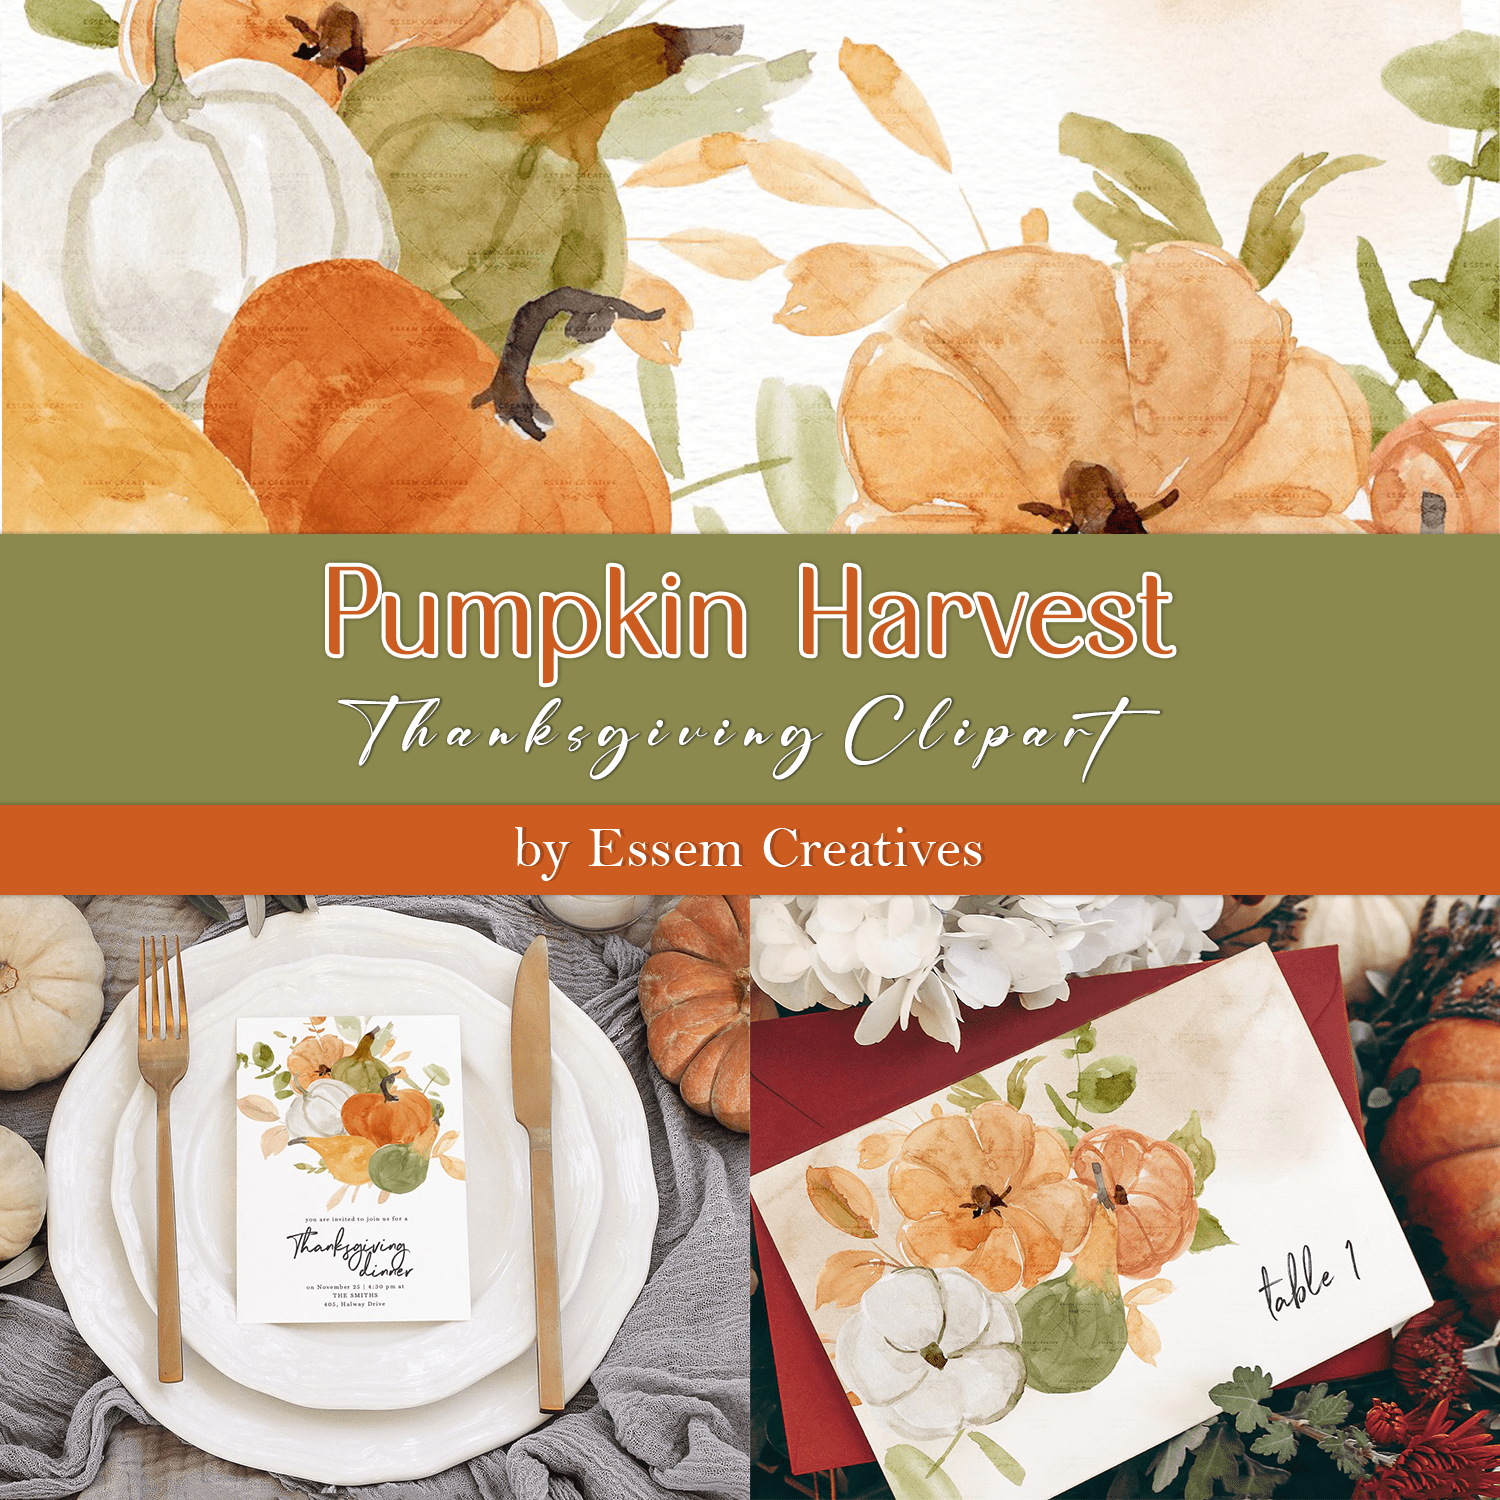 Pumpkin Harvest Thanksgiving Clipart cover.